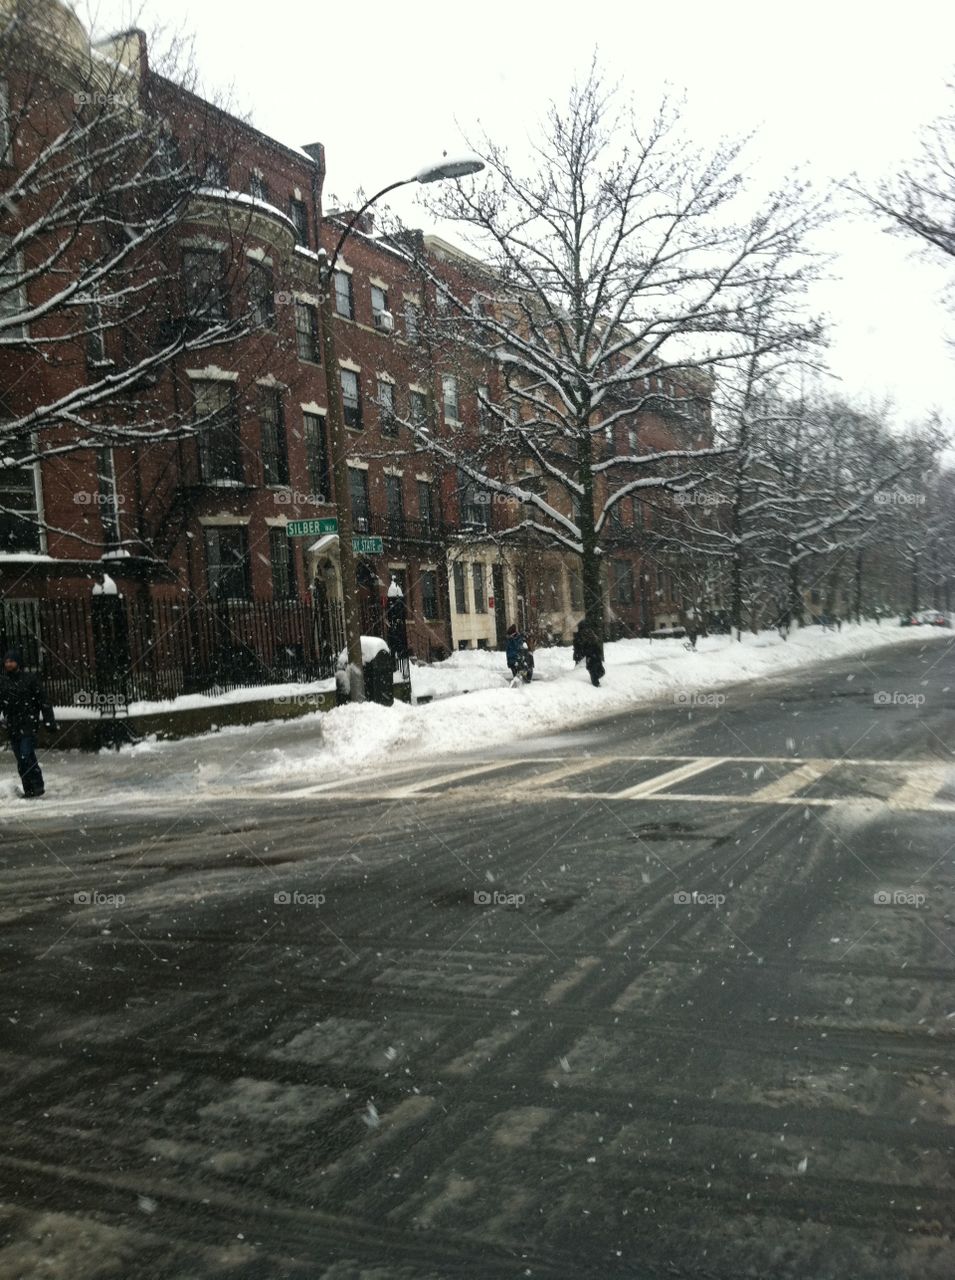 Crosswalk in the snow